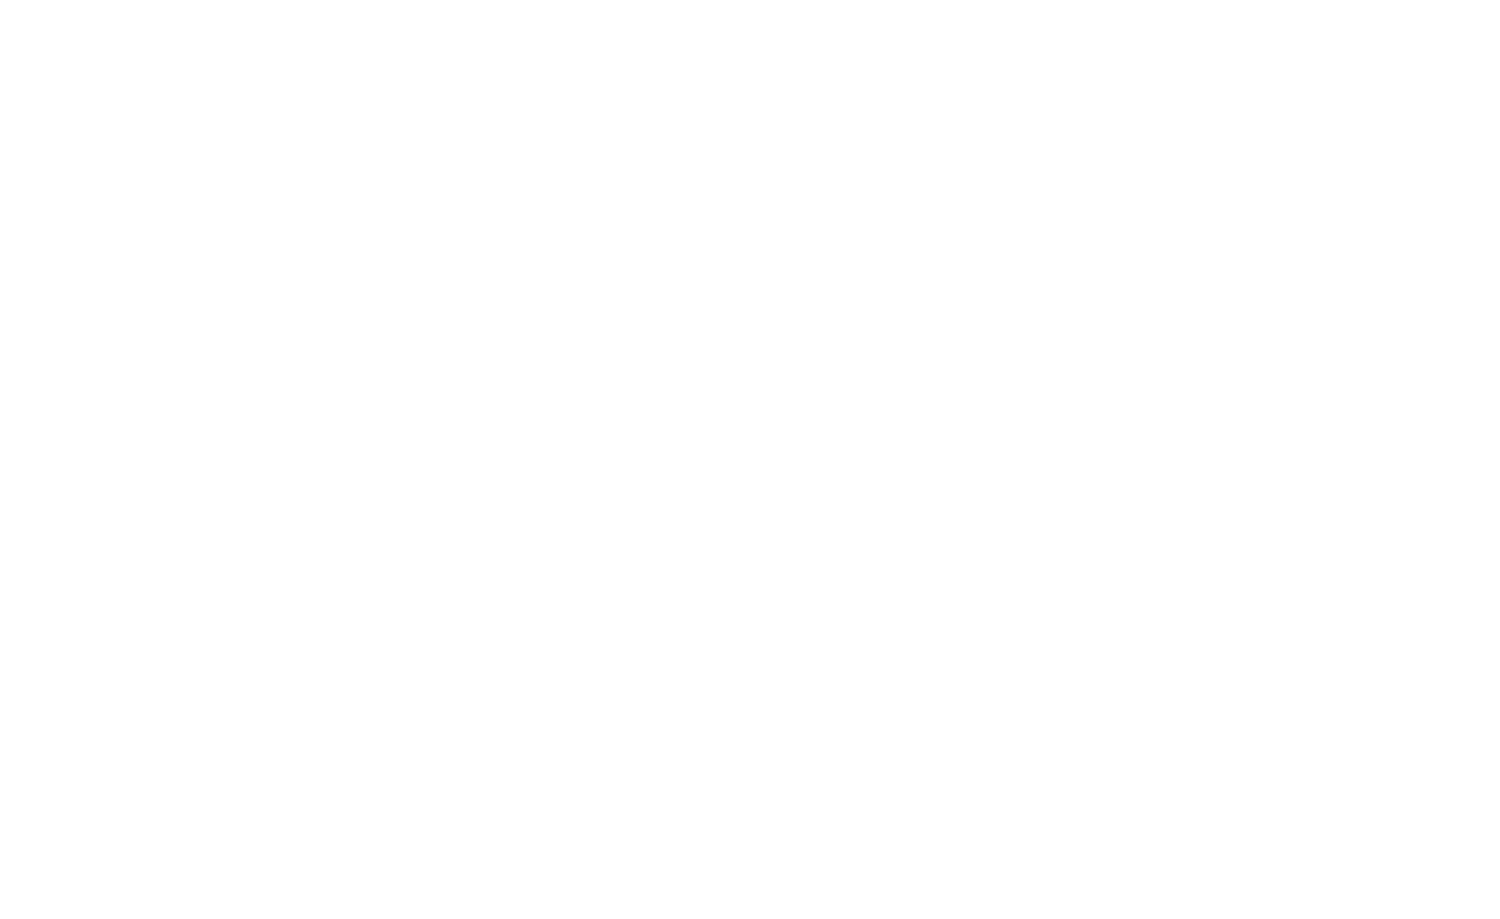 Espace Physio